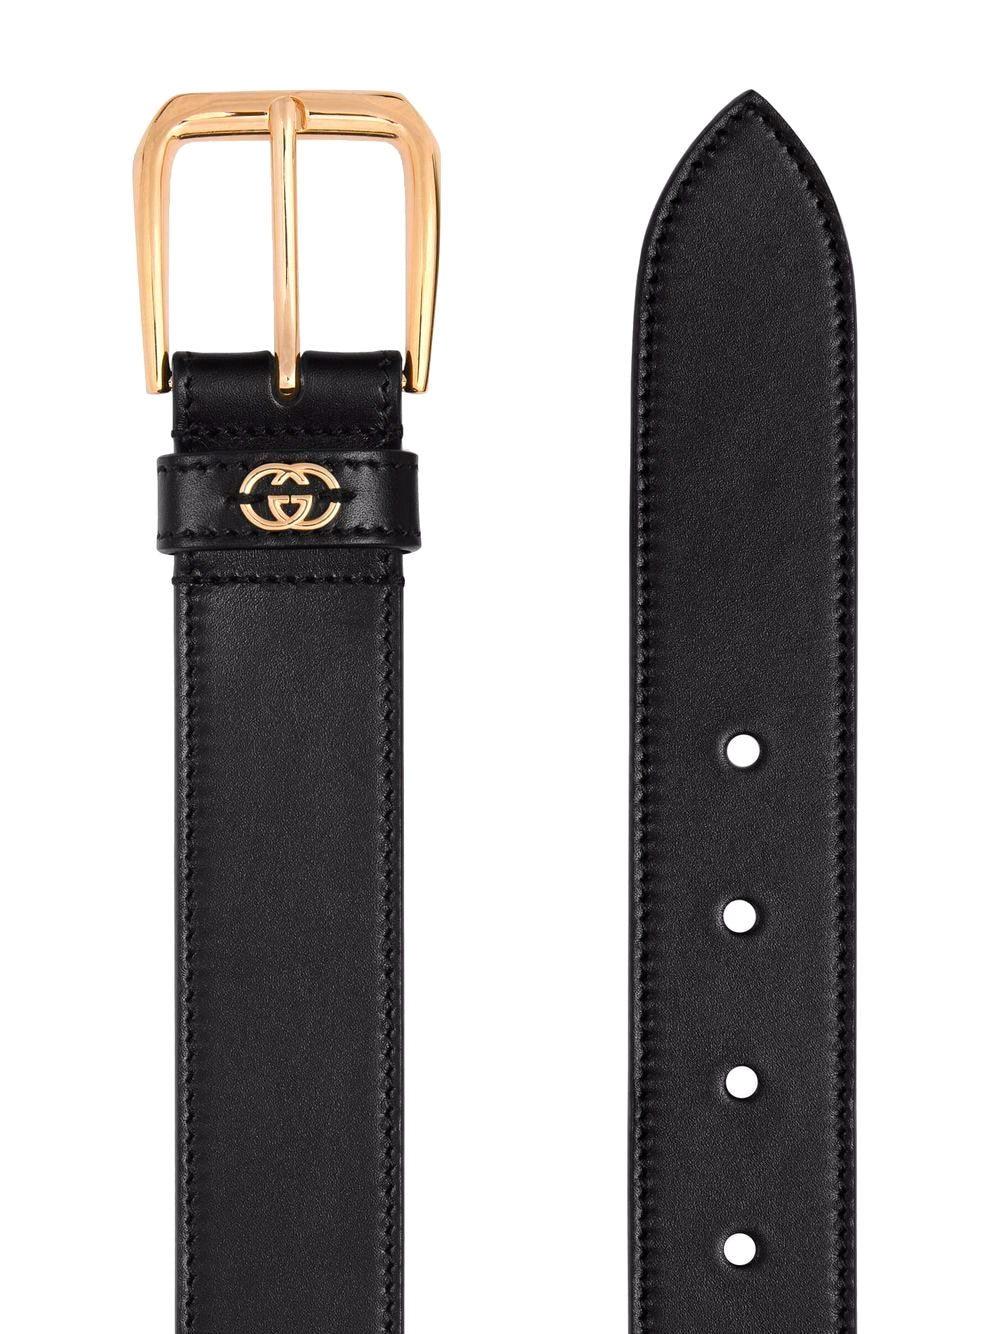 Cinturón con logotipo G entrelazado